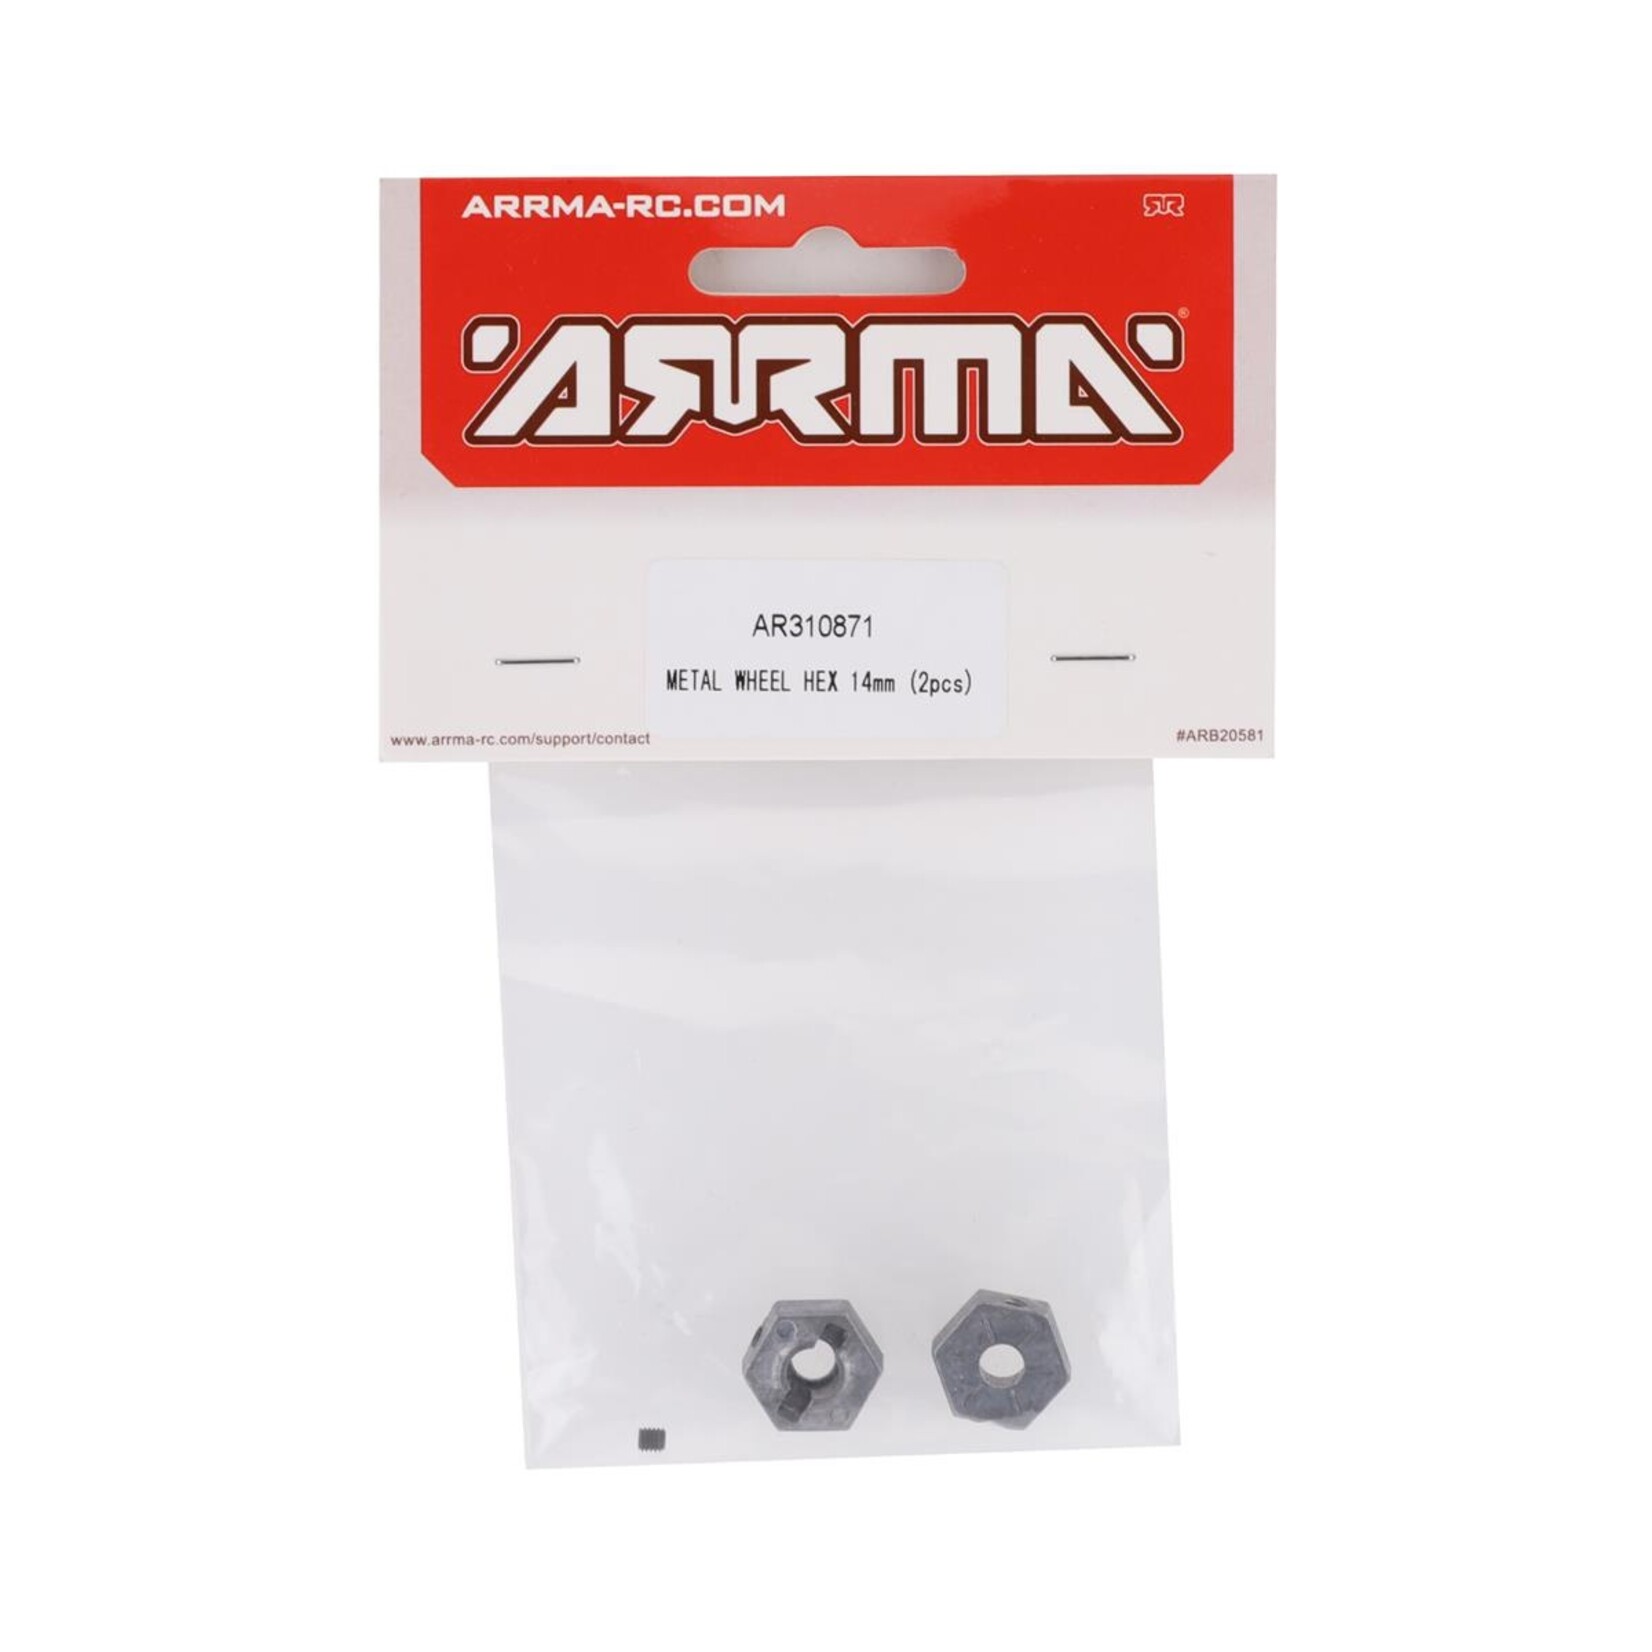 ARRMA Arrma 14mm Wheel Hex (Metal) (2) #AR310871